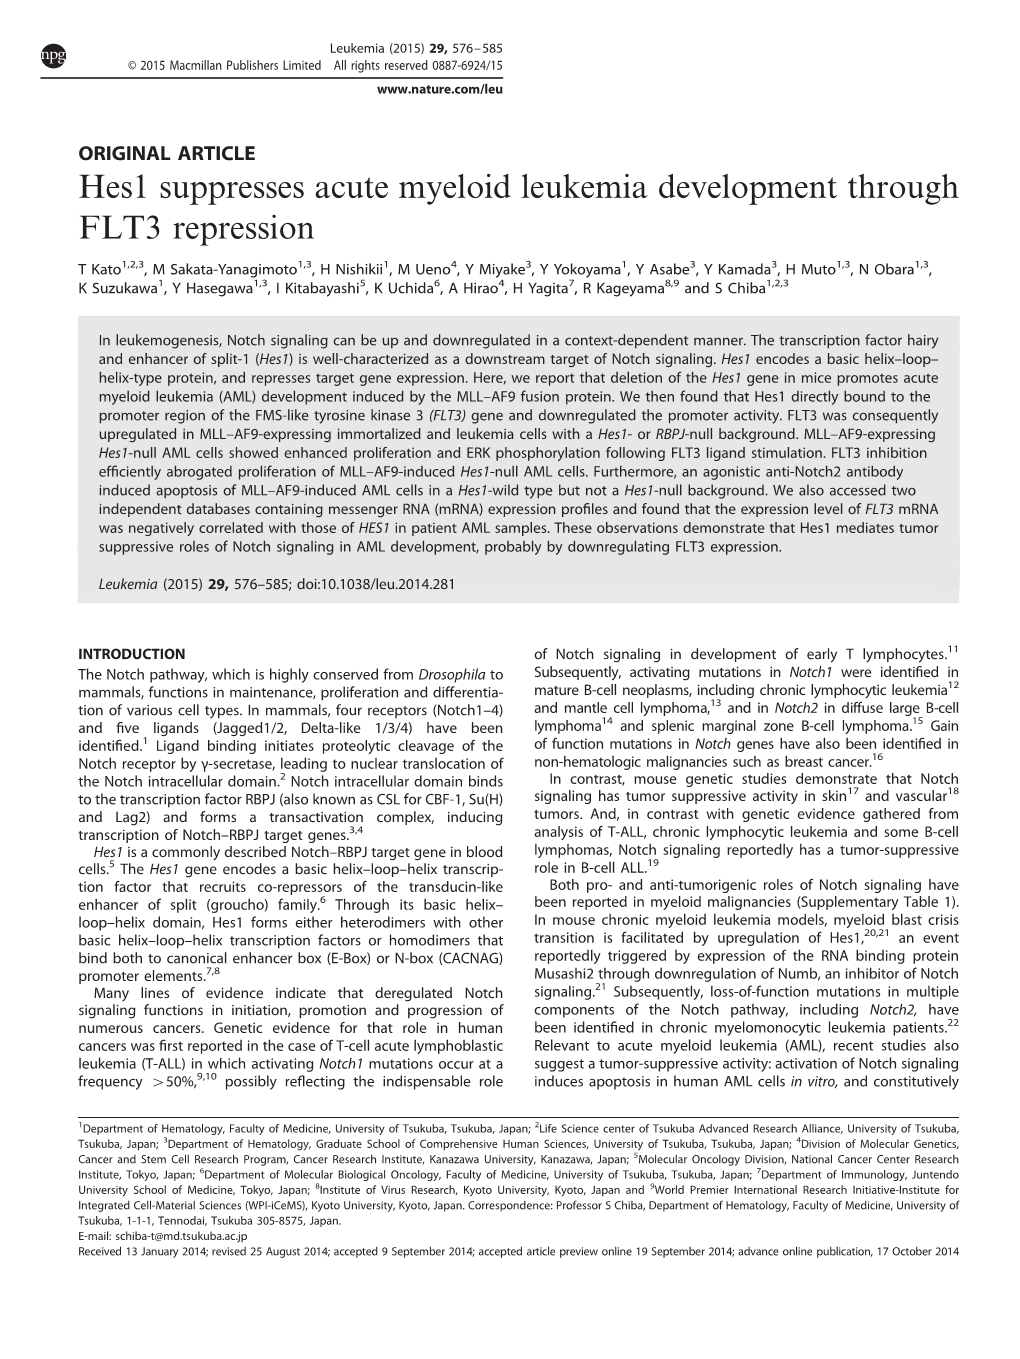 Hes1 Suppresses Acute Myeloid Leukemia Development Through FLT3 Repression